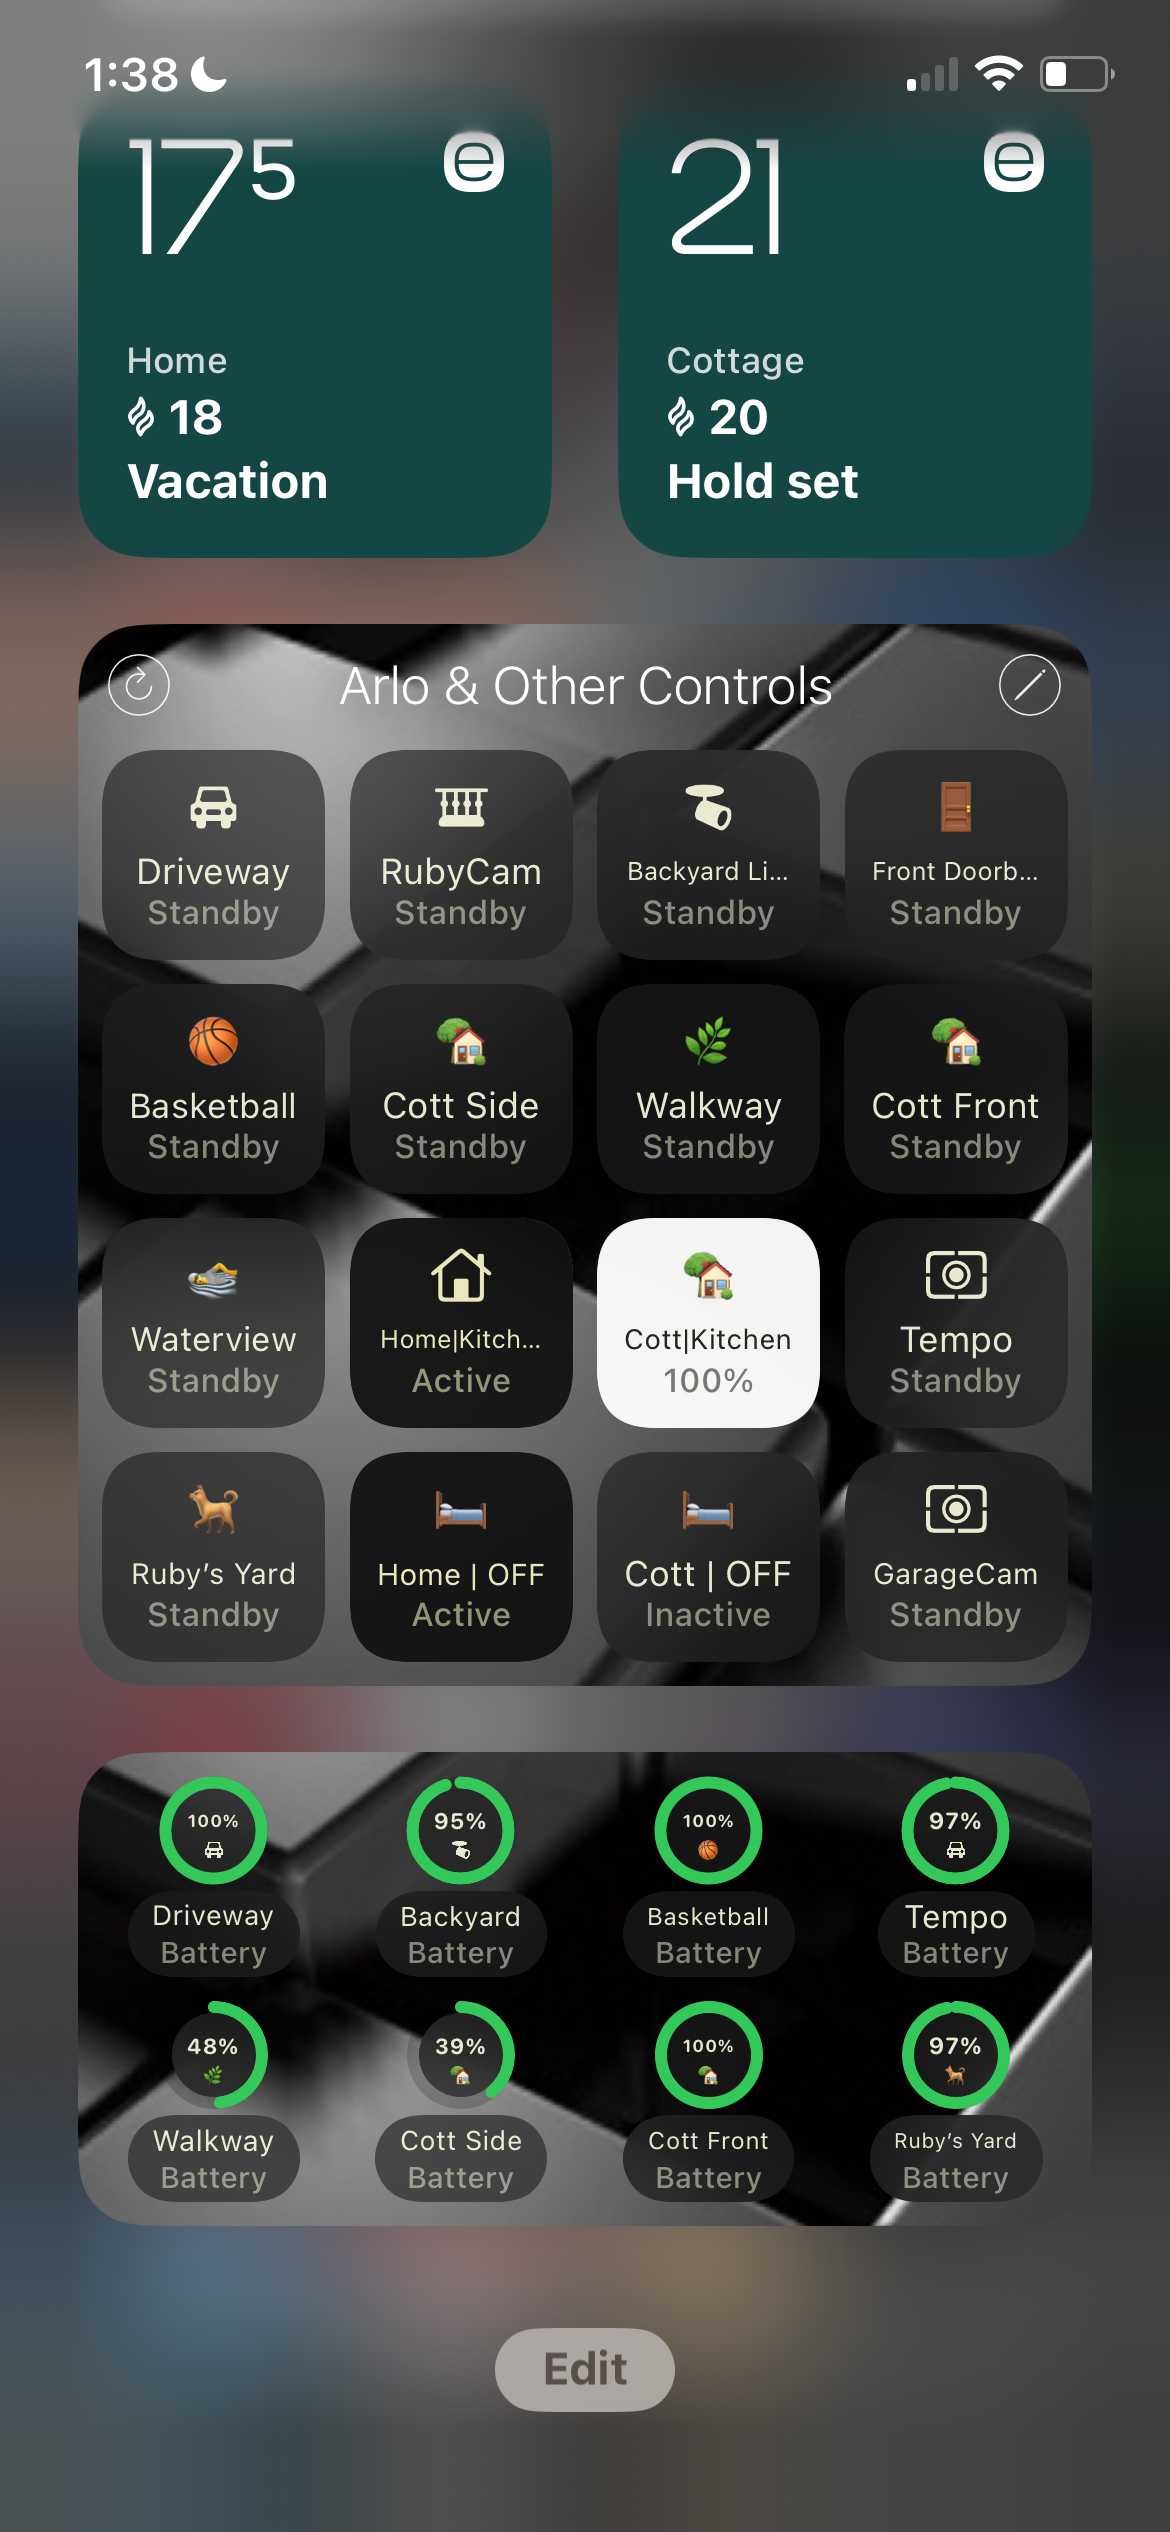 Arlo Pro 3 Floodlight now supports Apple HomeKit! - Arlo Community